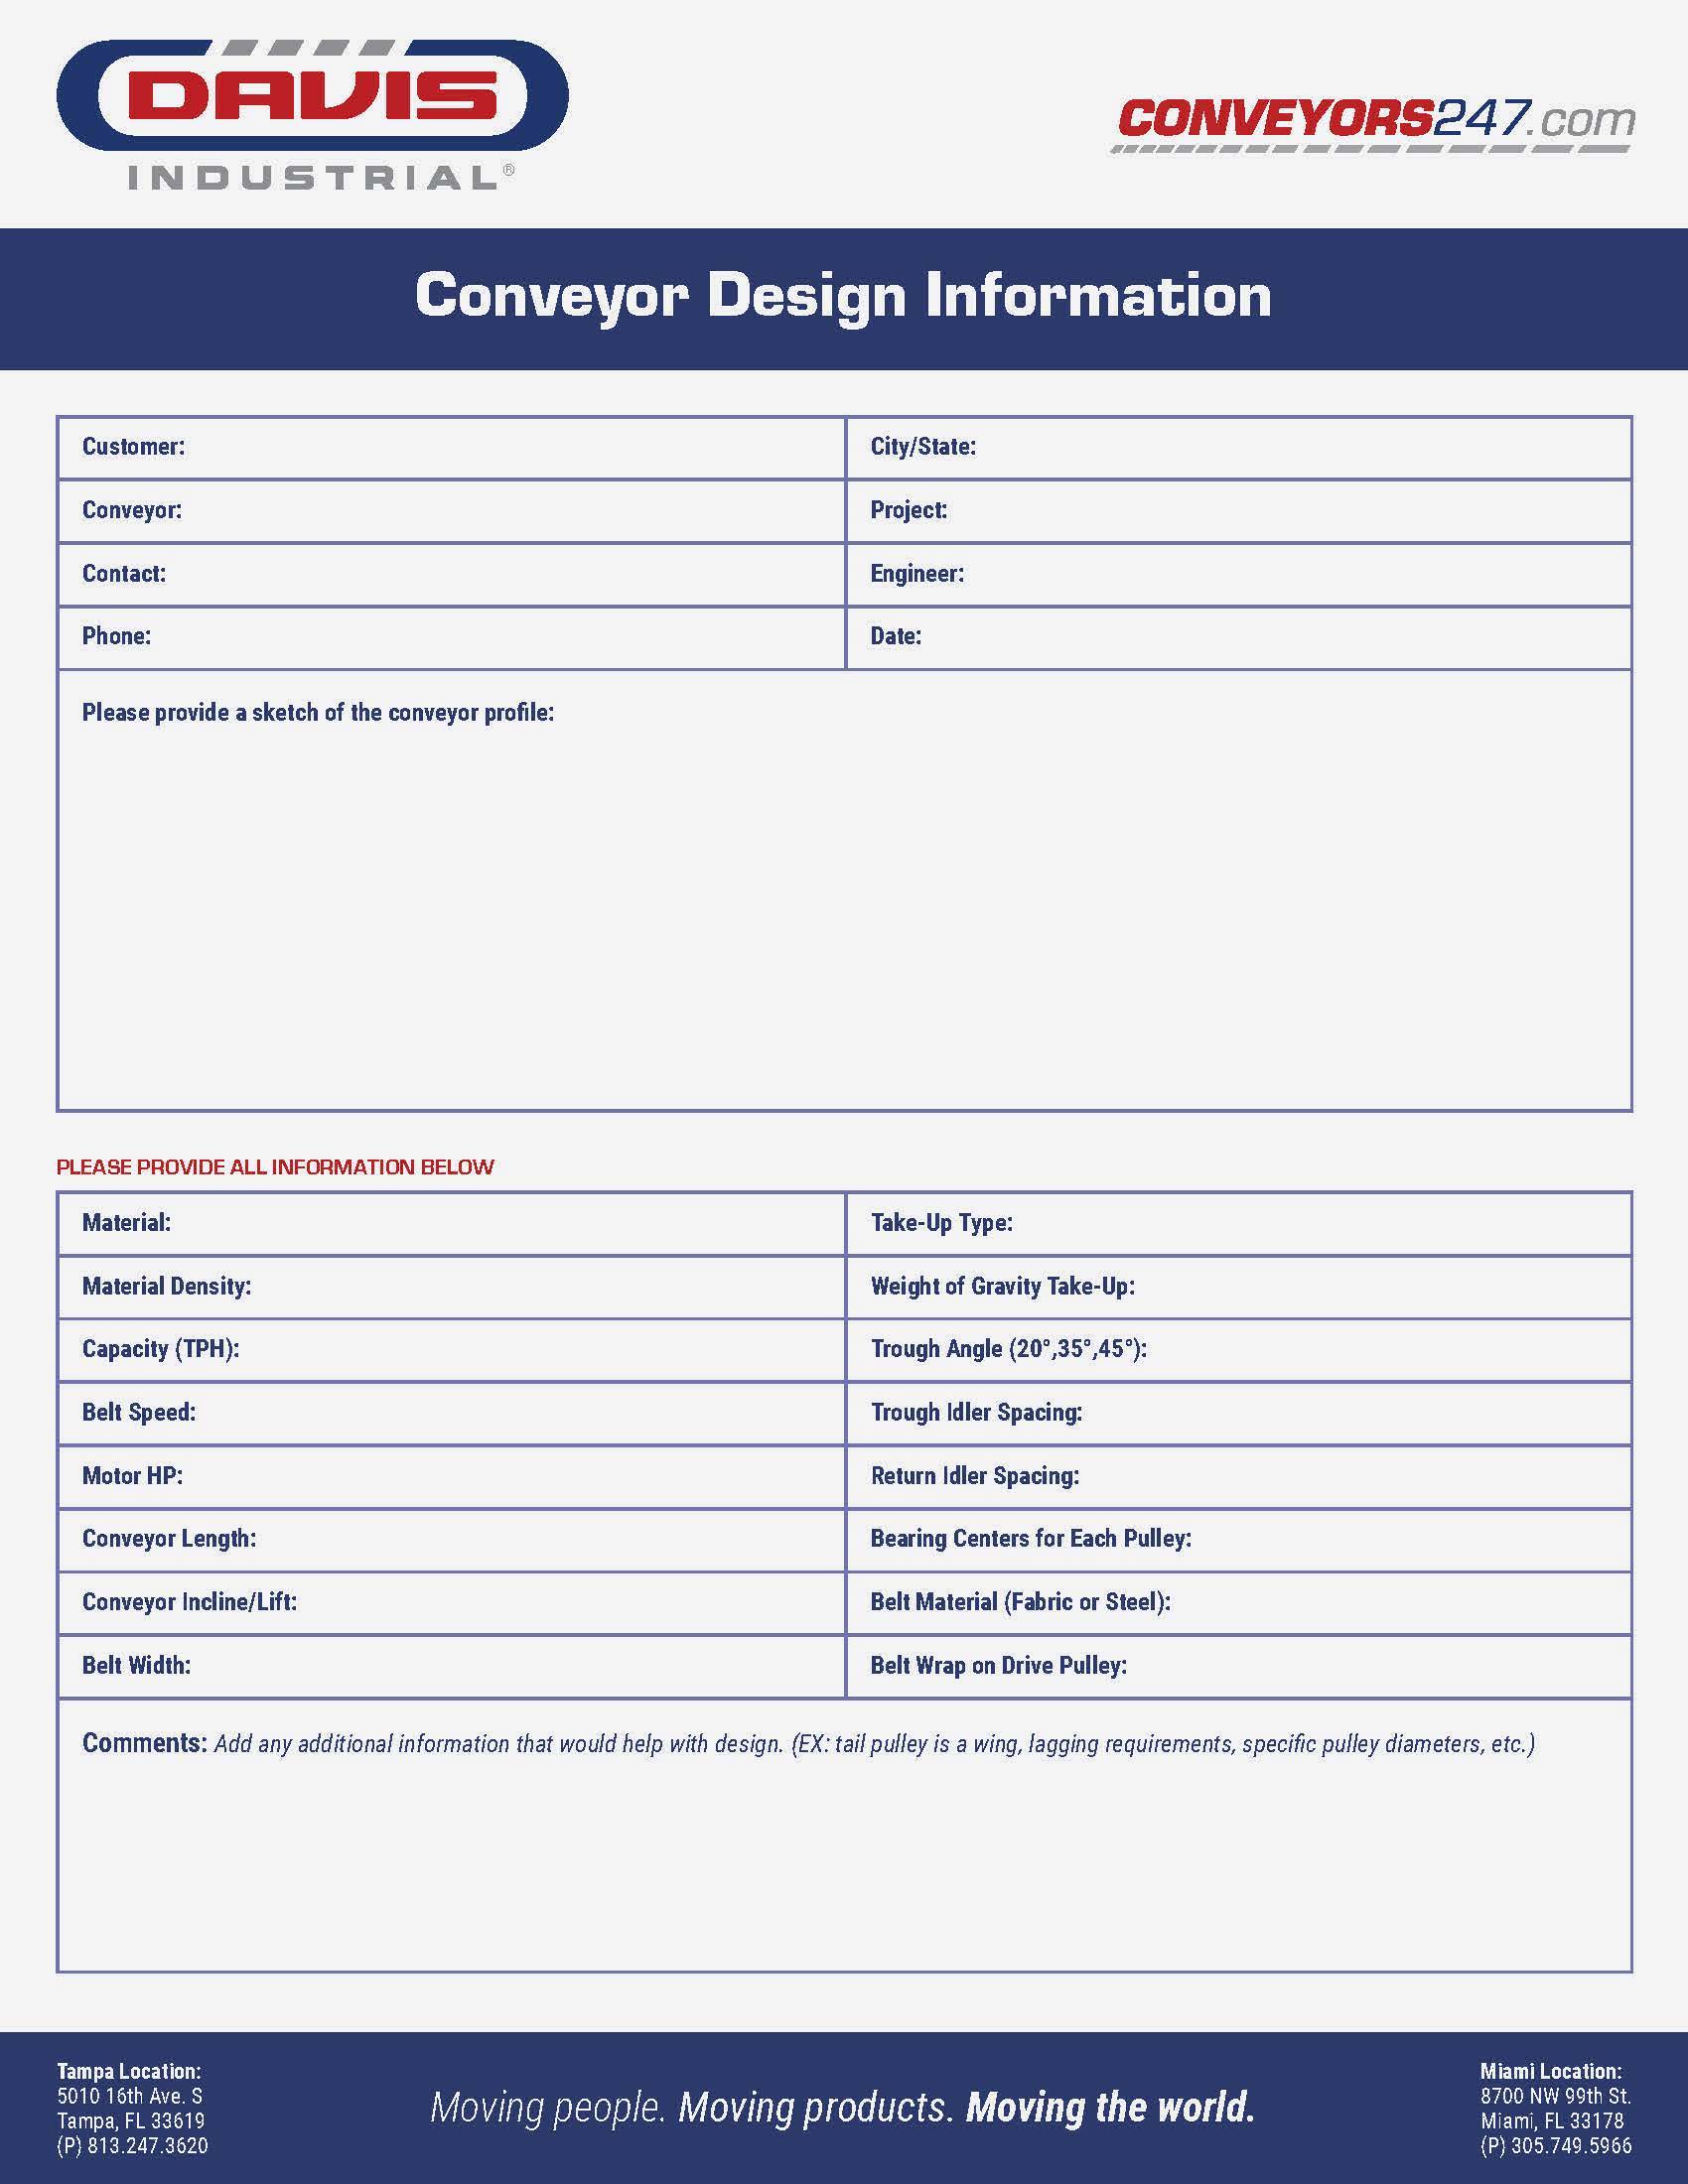 Davis_Conveyor Design Info_Form